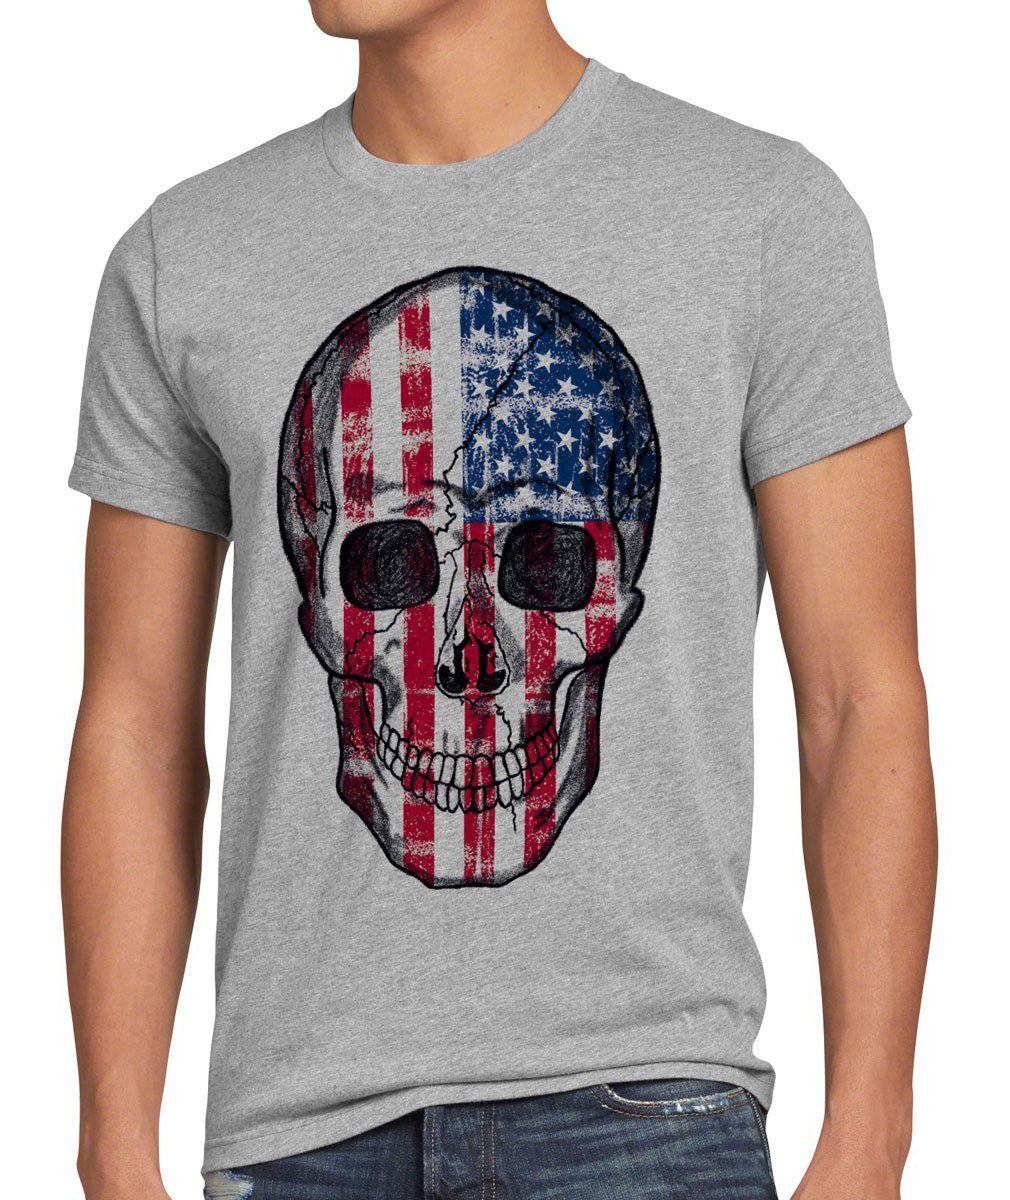 style3 Print-Shirt Herren T-Shirt USA Skull Totenkopf stars stripes flagge amerika knochen rocker grau meliert